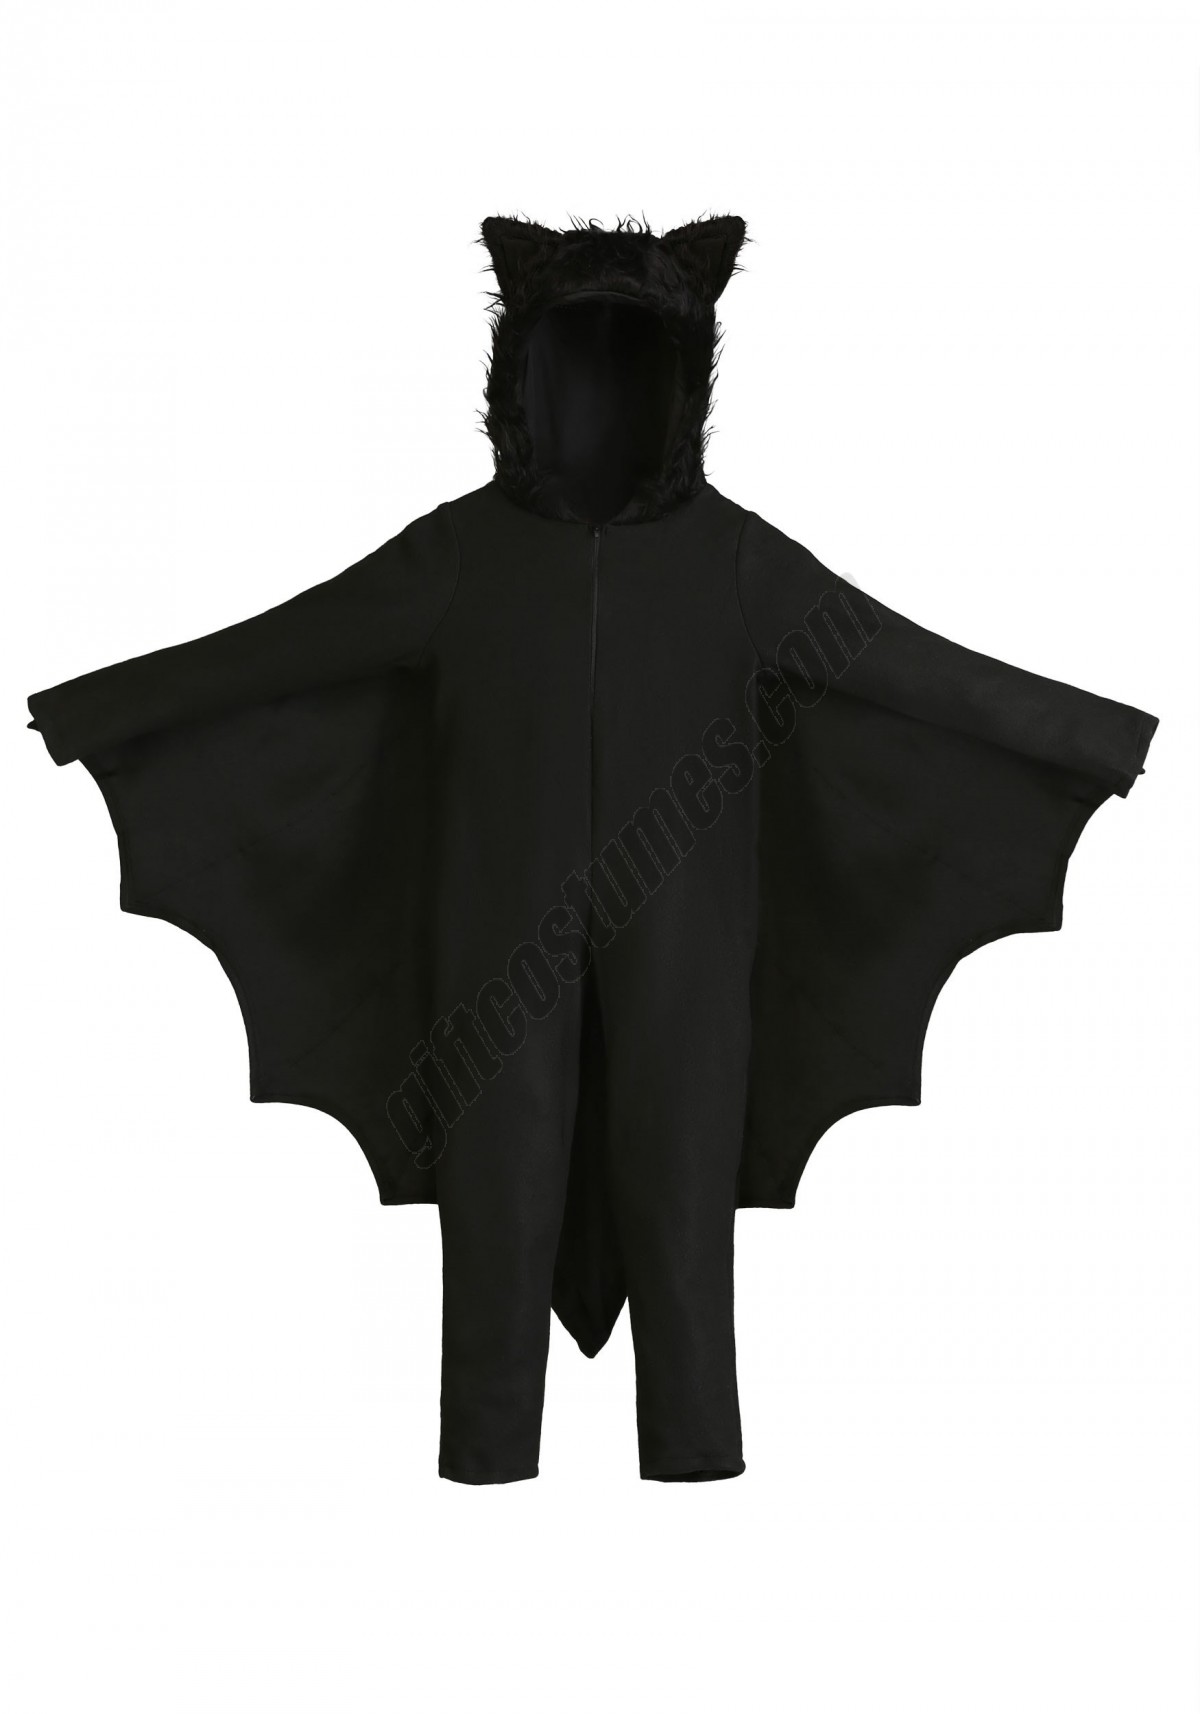 Toddler Fleece Bat Costume Promotions - -6